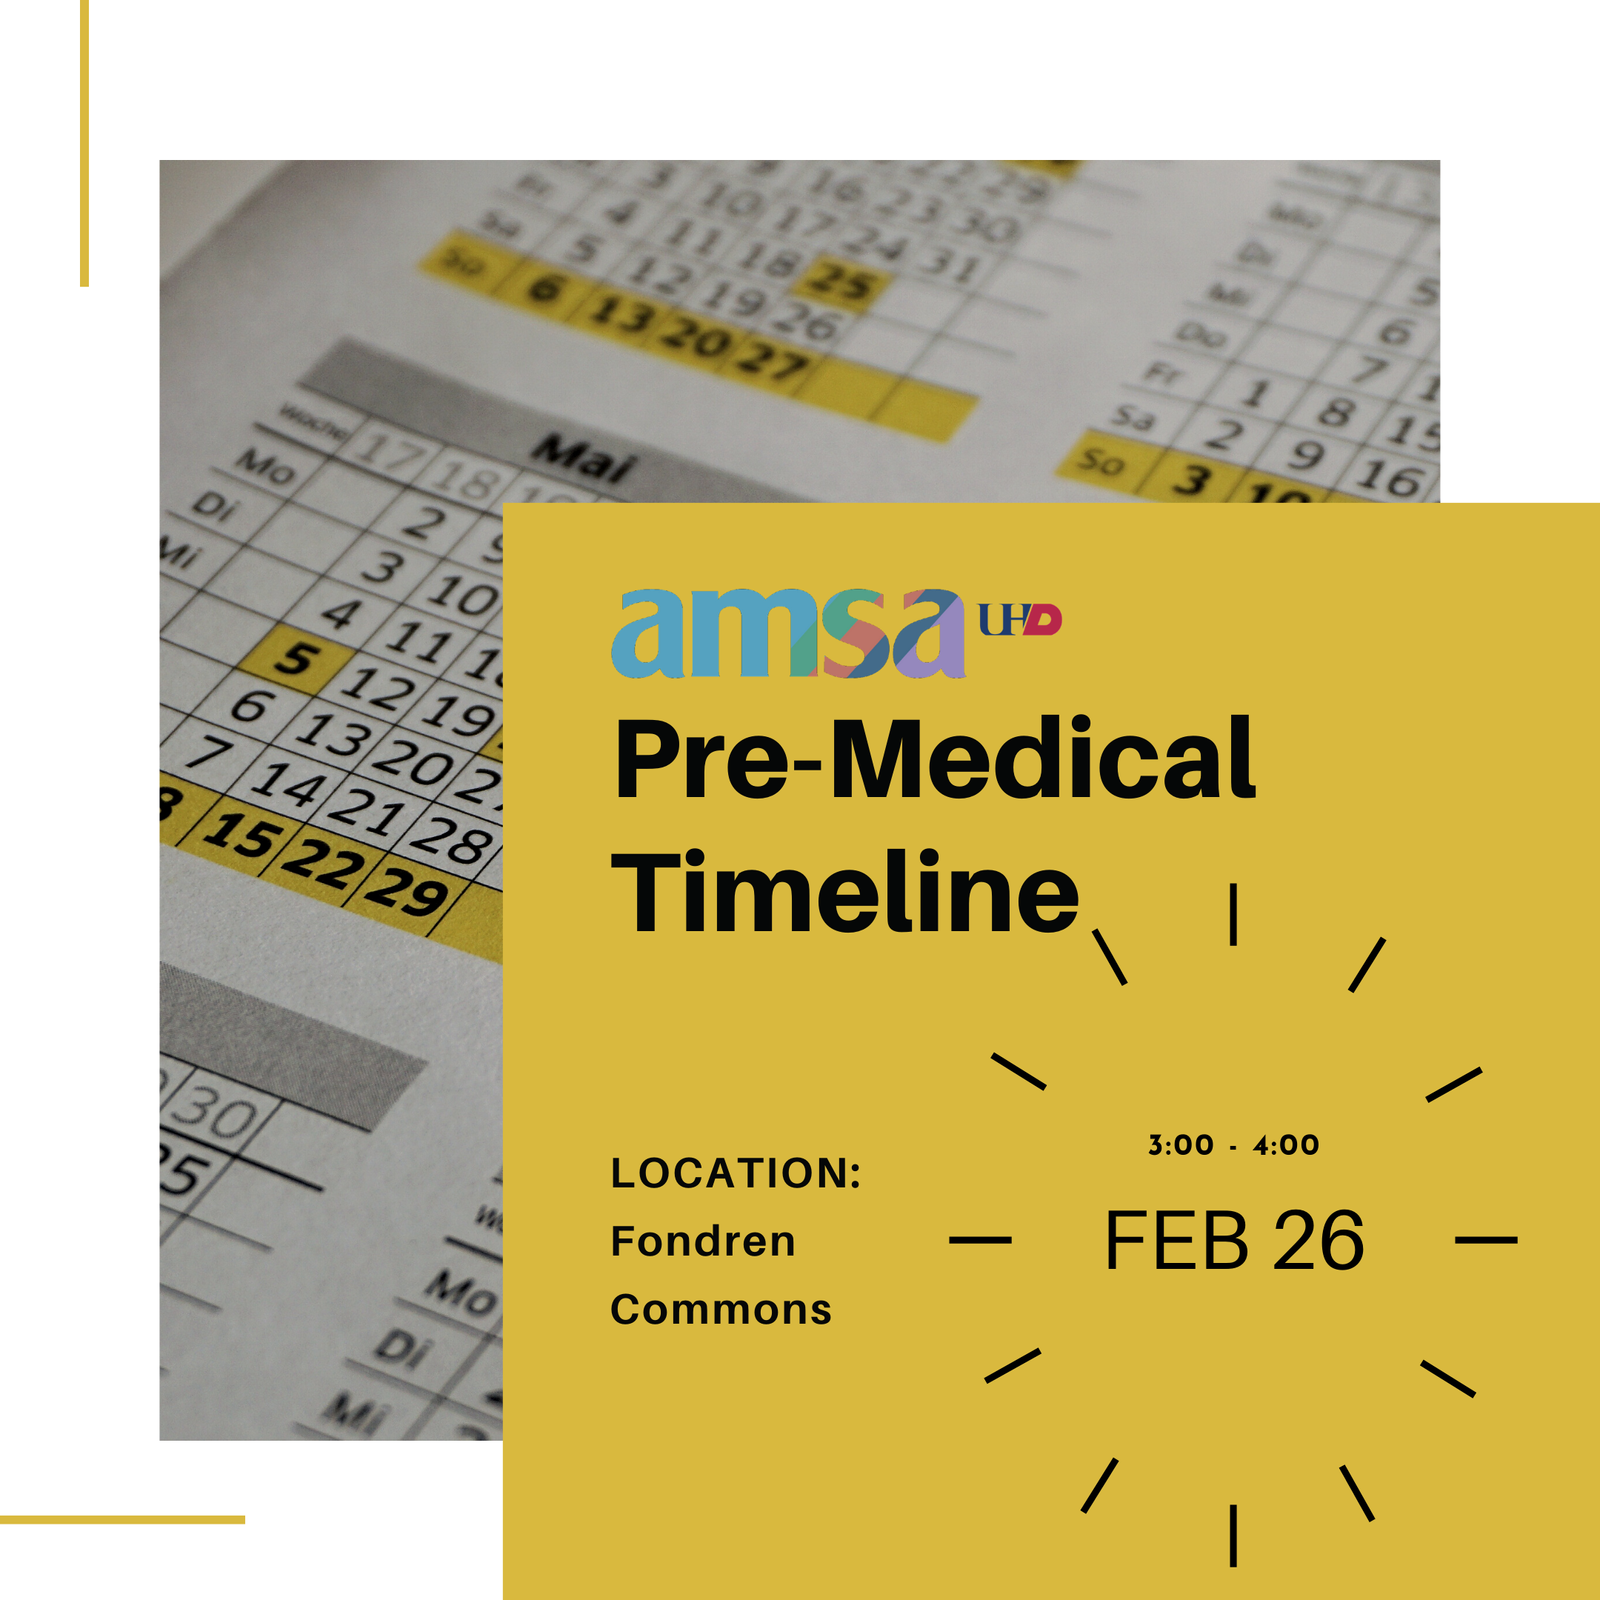 Pre-Medical Timeline – AMSA UHD